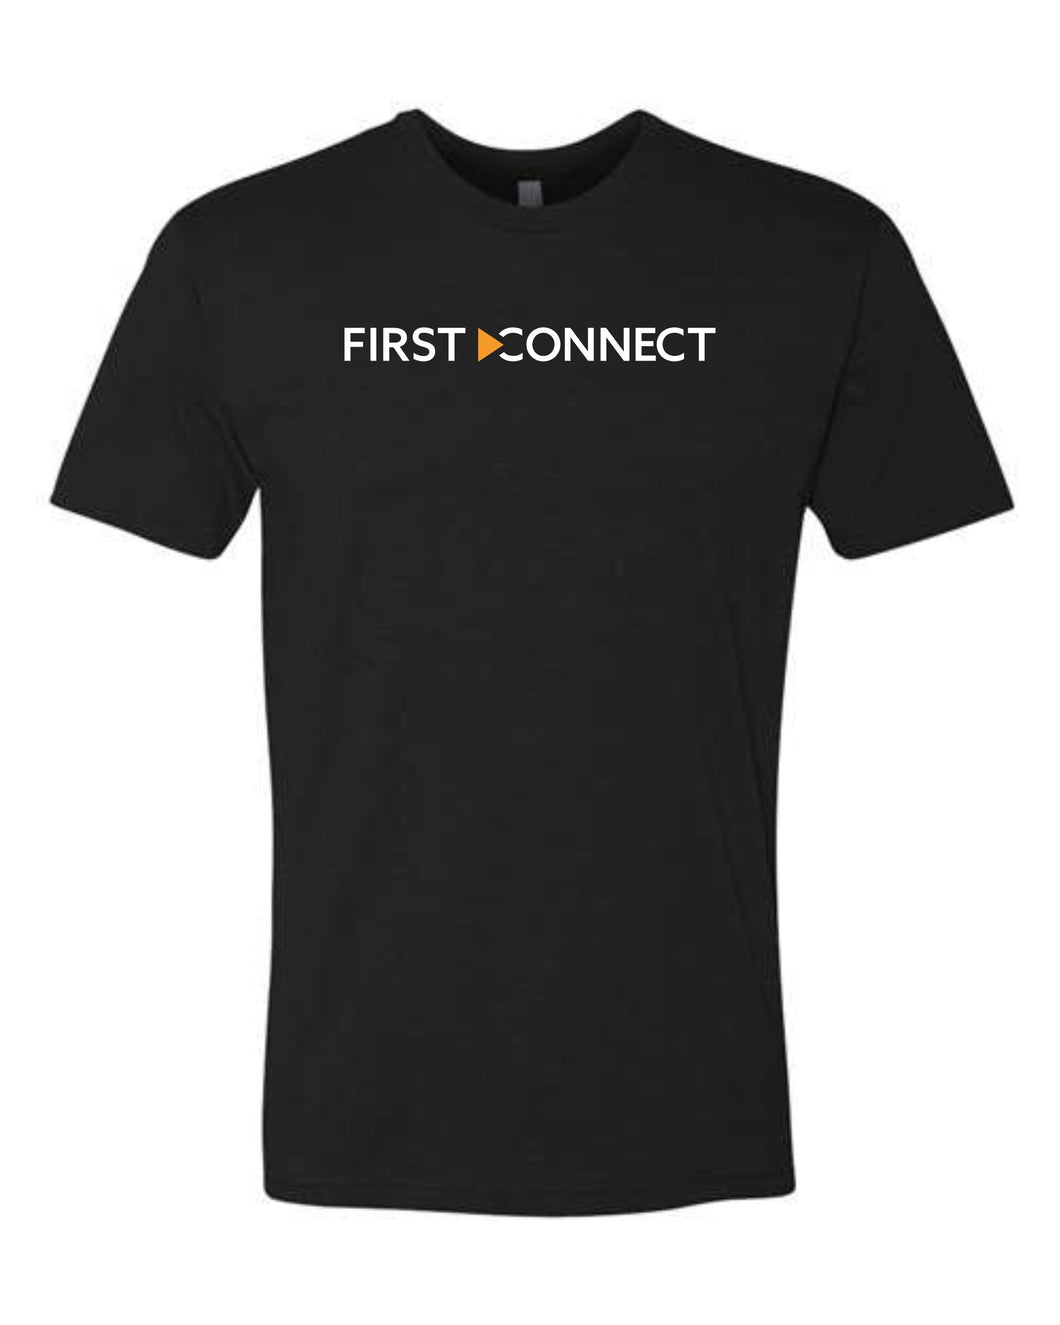 First Connect Men's Black T-Shirt